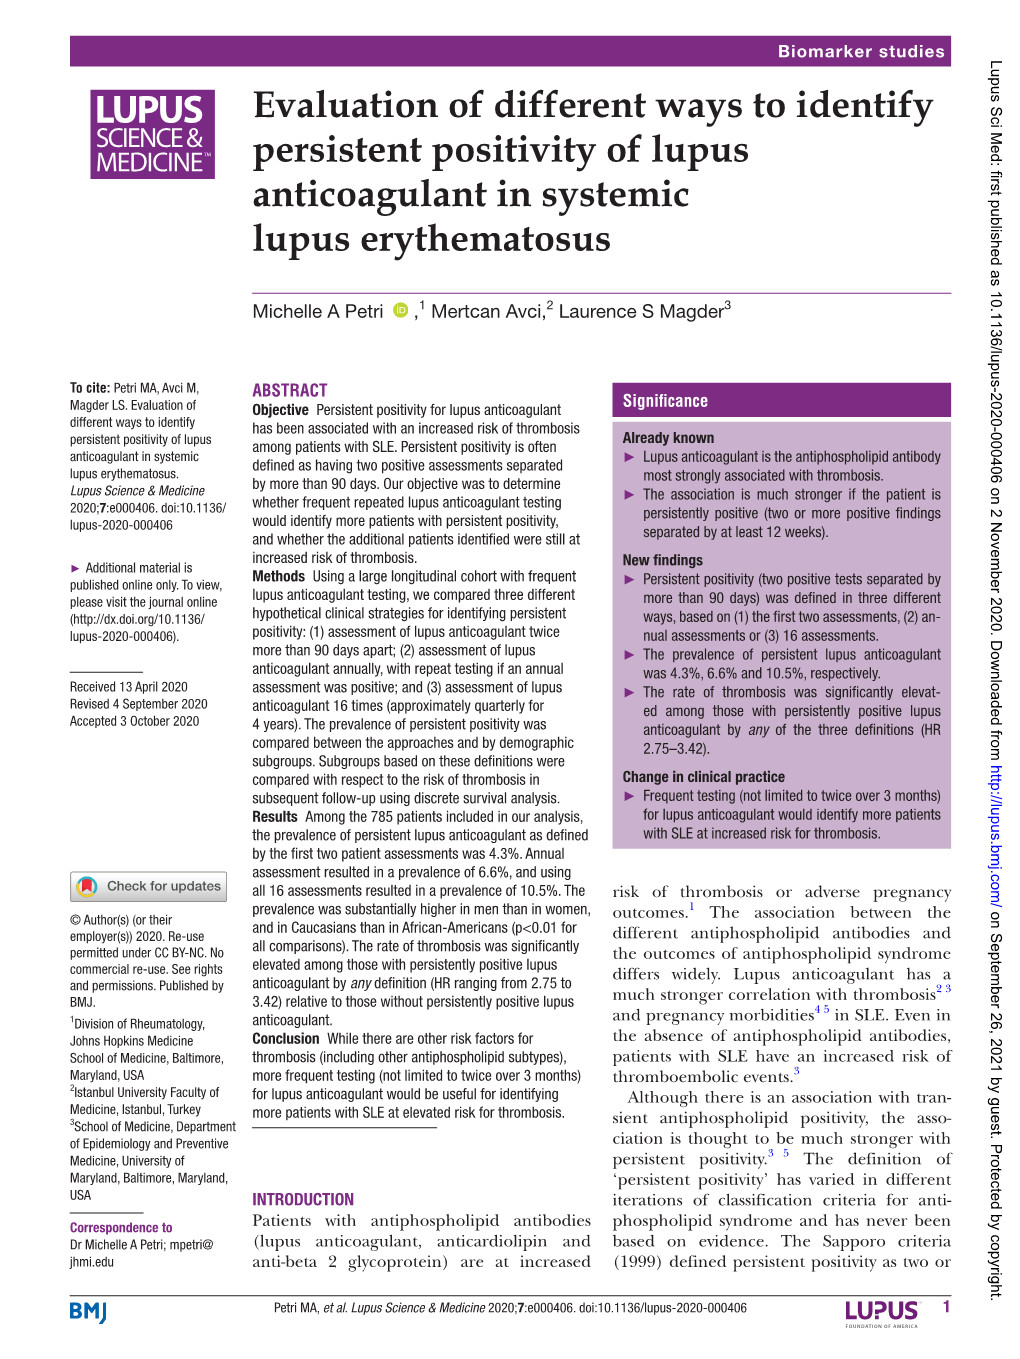 Evaluation of Different Ways to Identify Persistent Positivity of Lupus Anticoagulant in Systemic Lupus Erythematosus